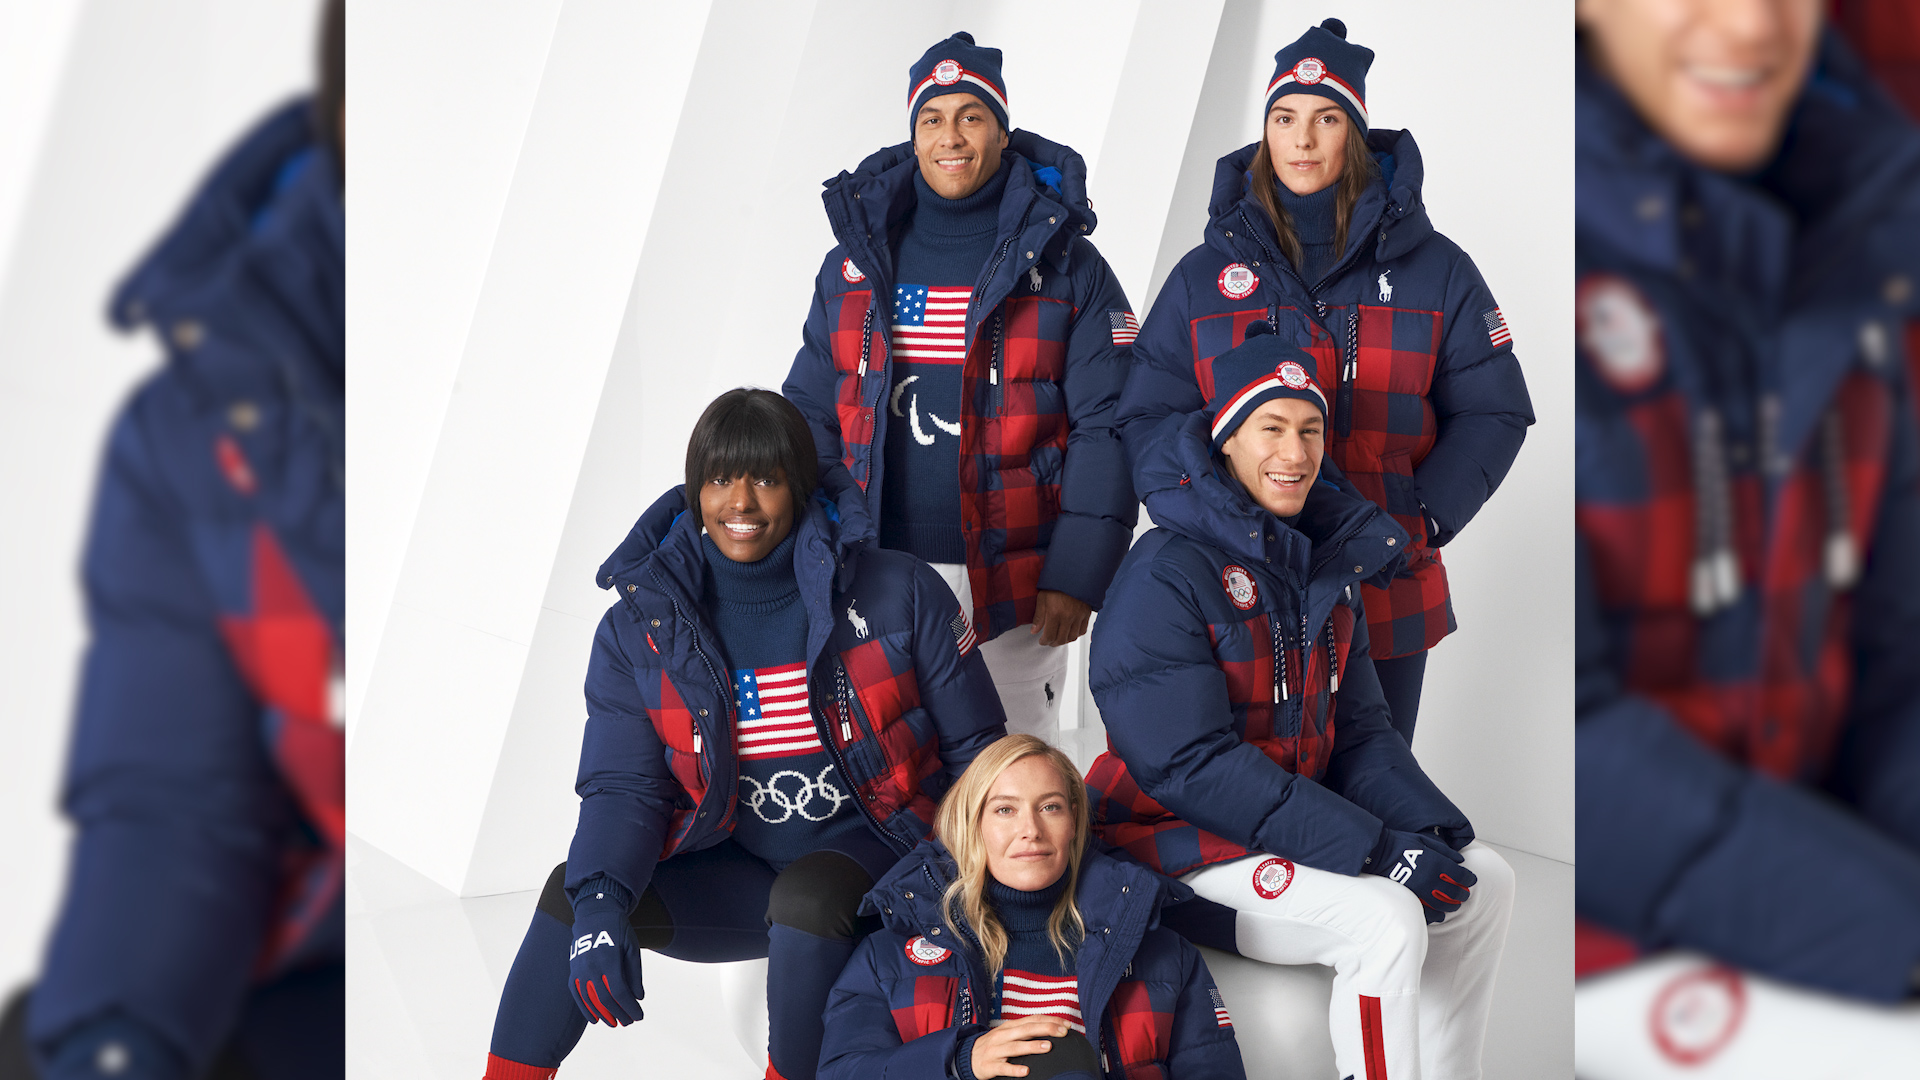 U.S. Winter Olympics uniforms